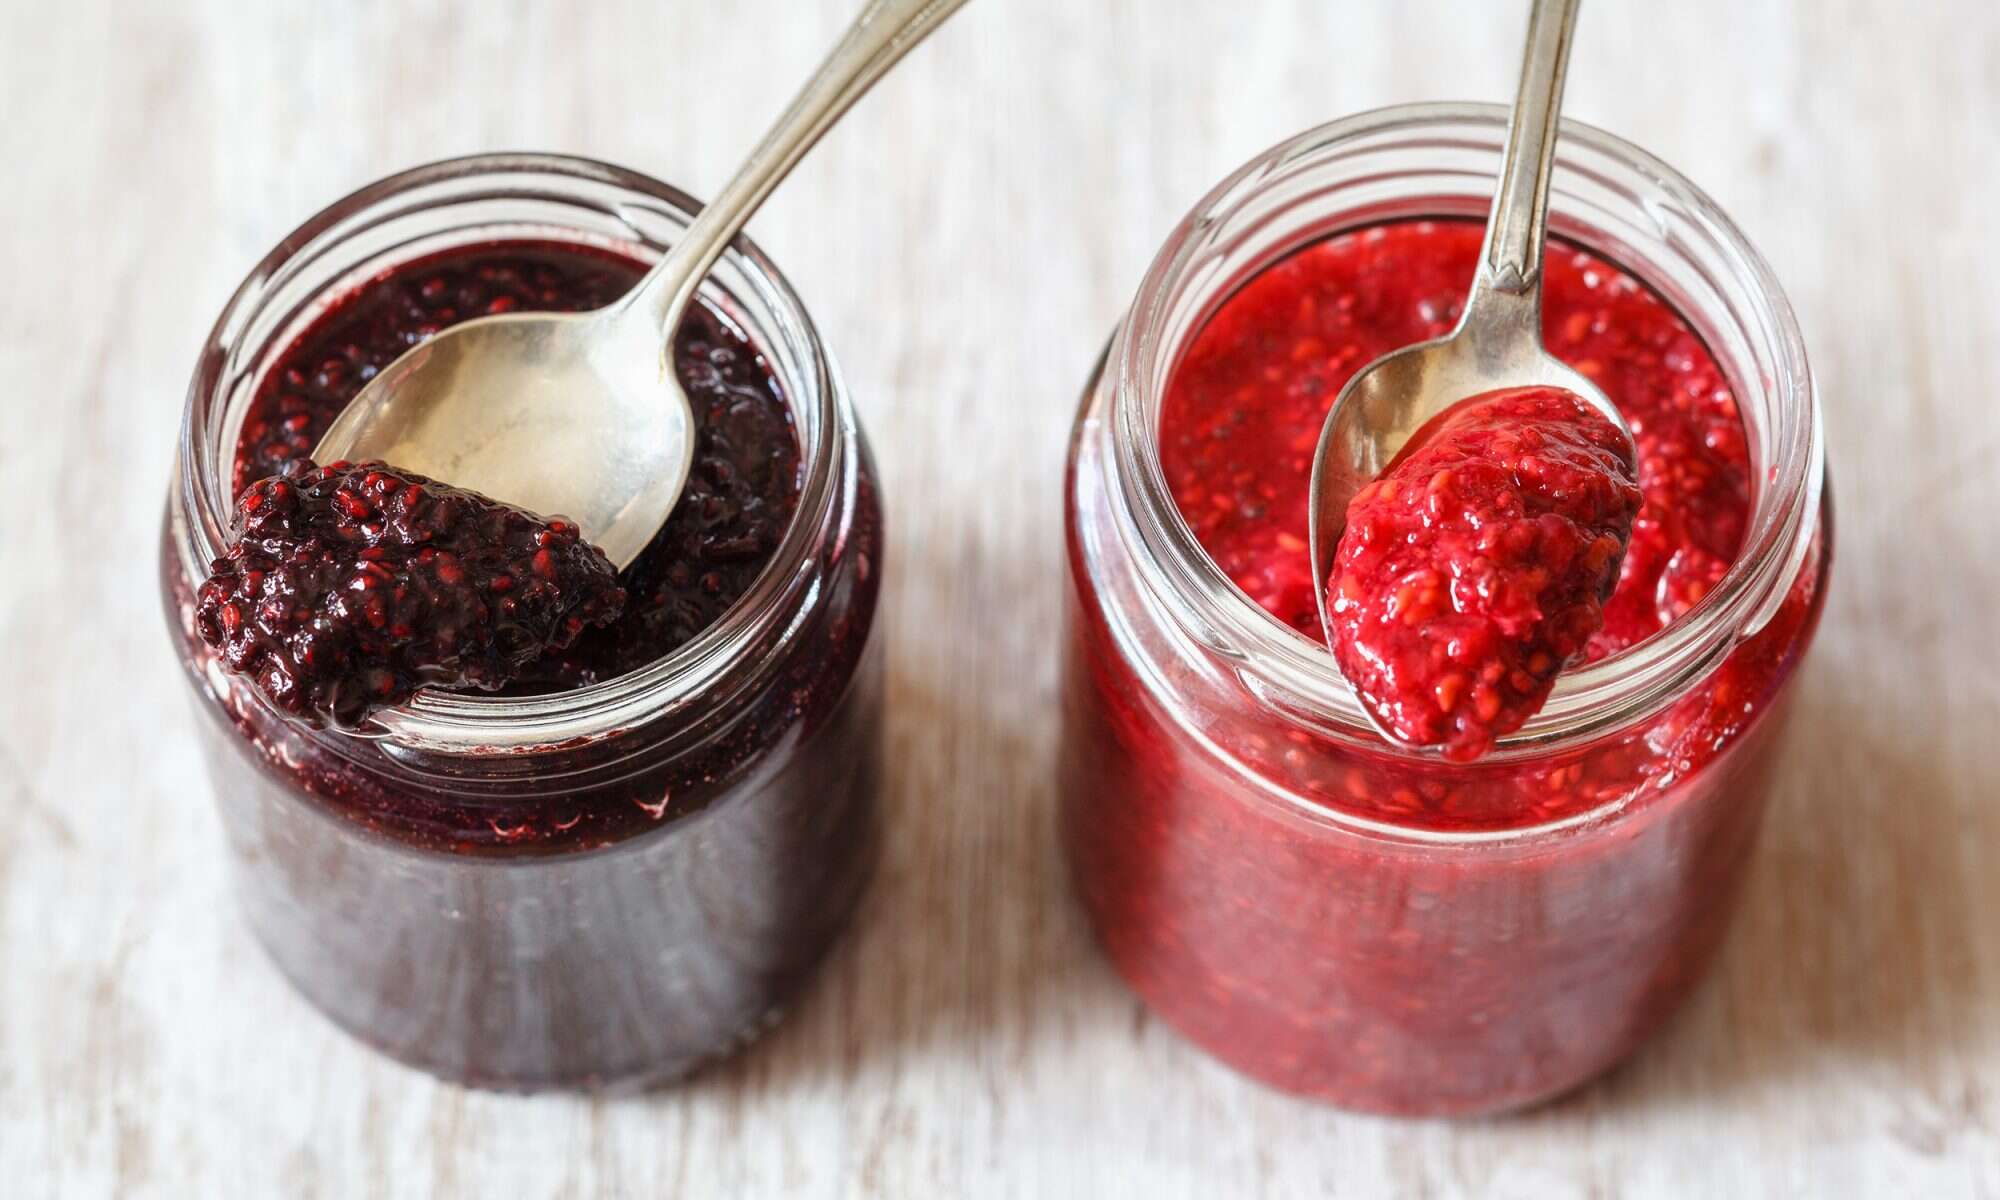 Health benefits of fruit jams